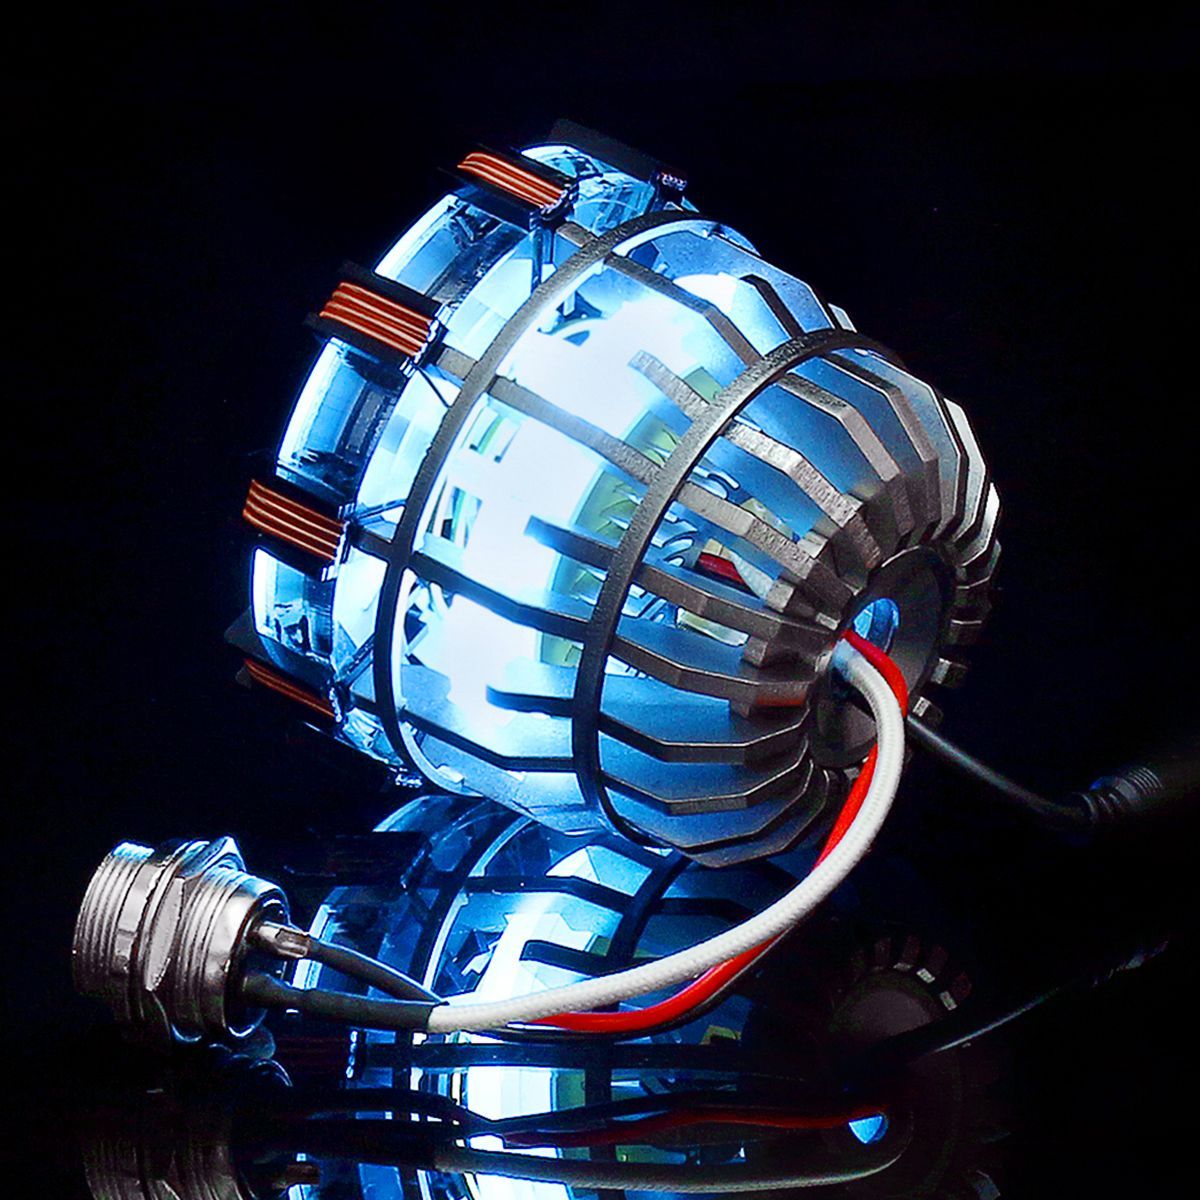 MK2-Acrylic-Tony-ARC-Reactor-Model-DIY-Kit-USB-Chest-Lamp-Movie-Props-Illuminant-LED-Flash-Light-Set-1434467